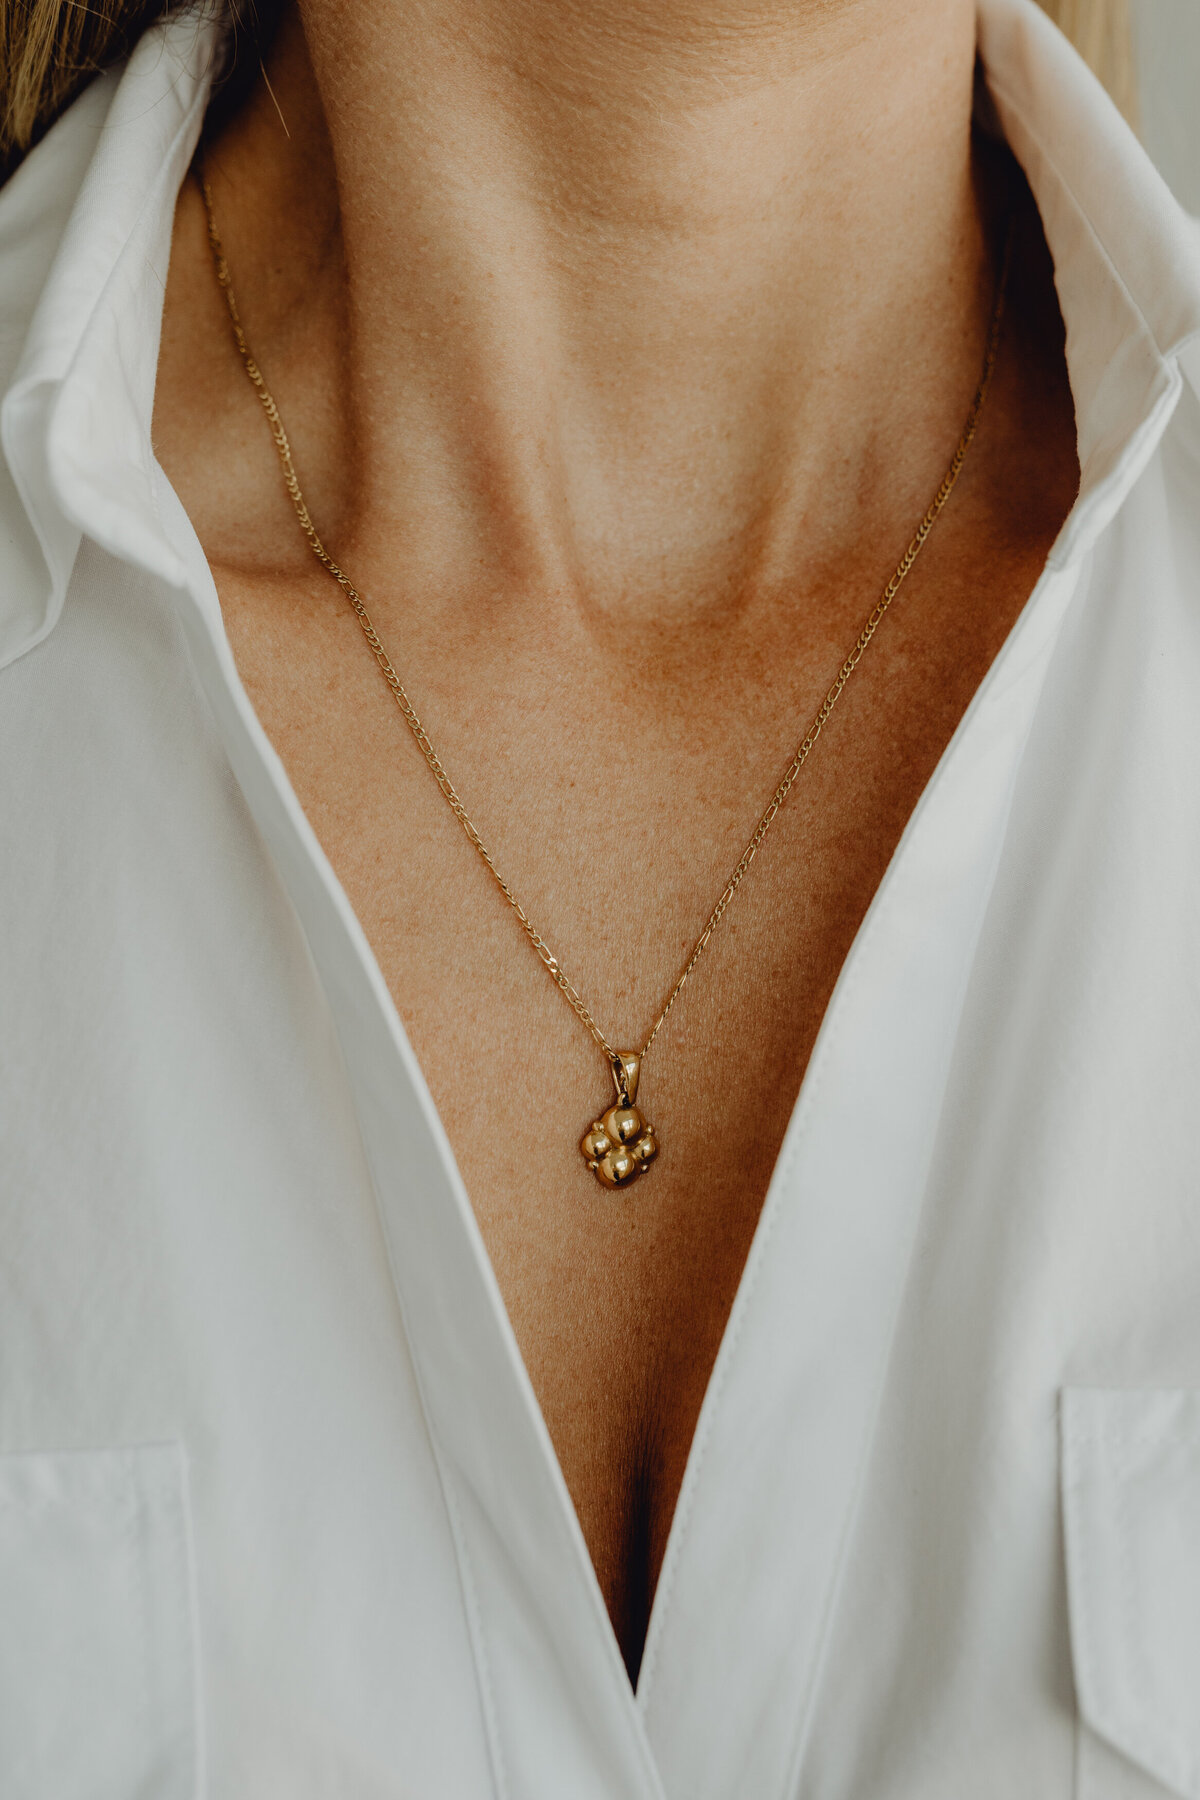 kaboompics_vintage-golden-necklace-jewelry-27545